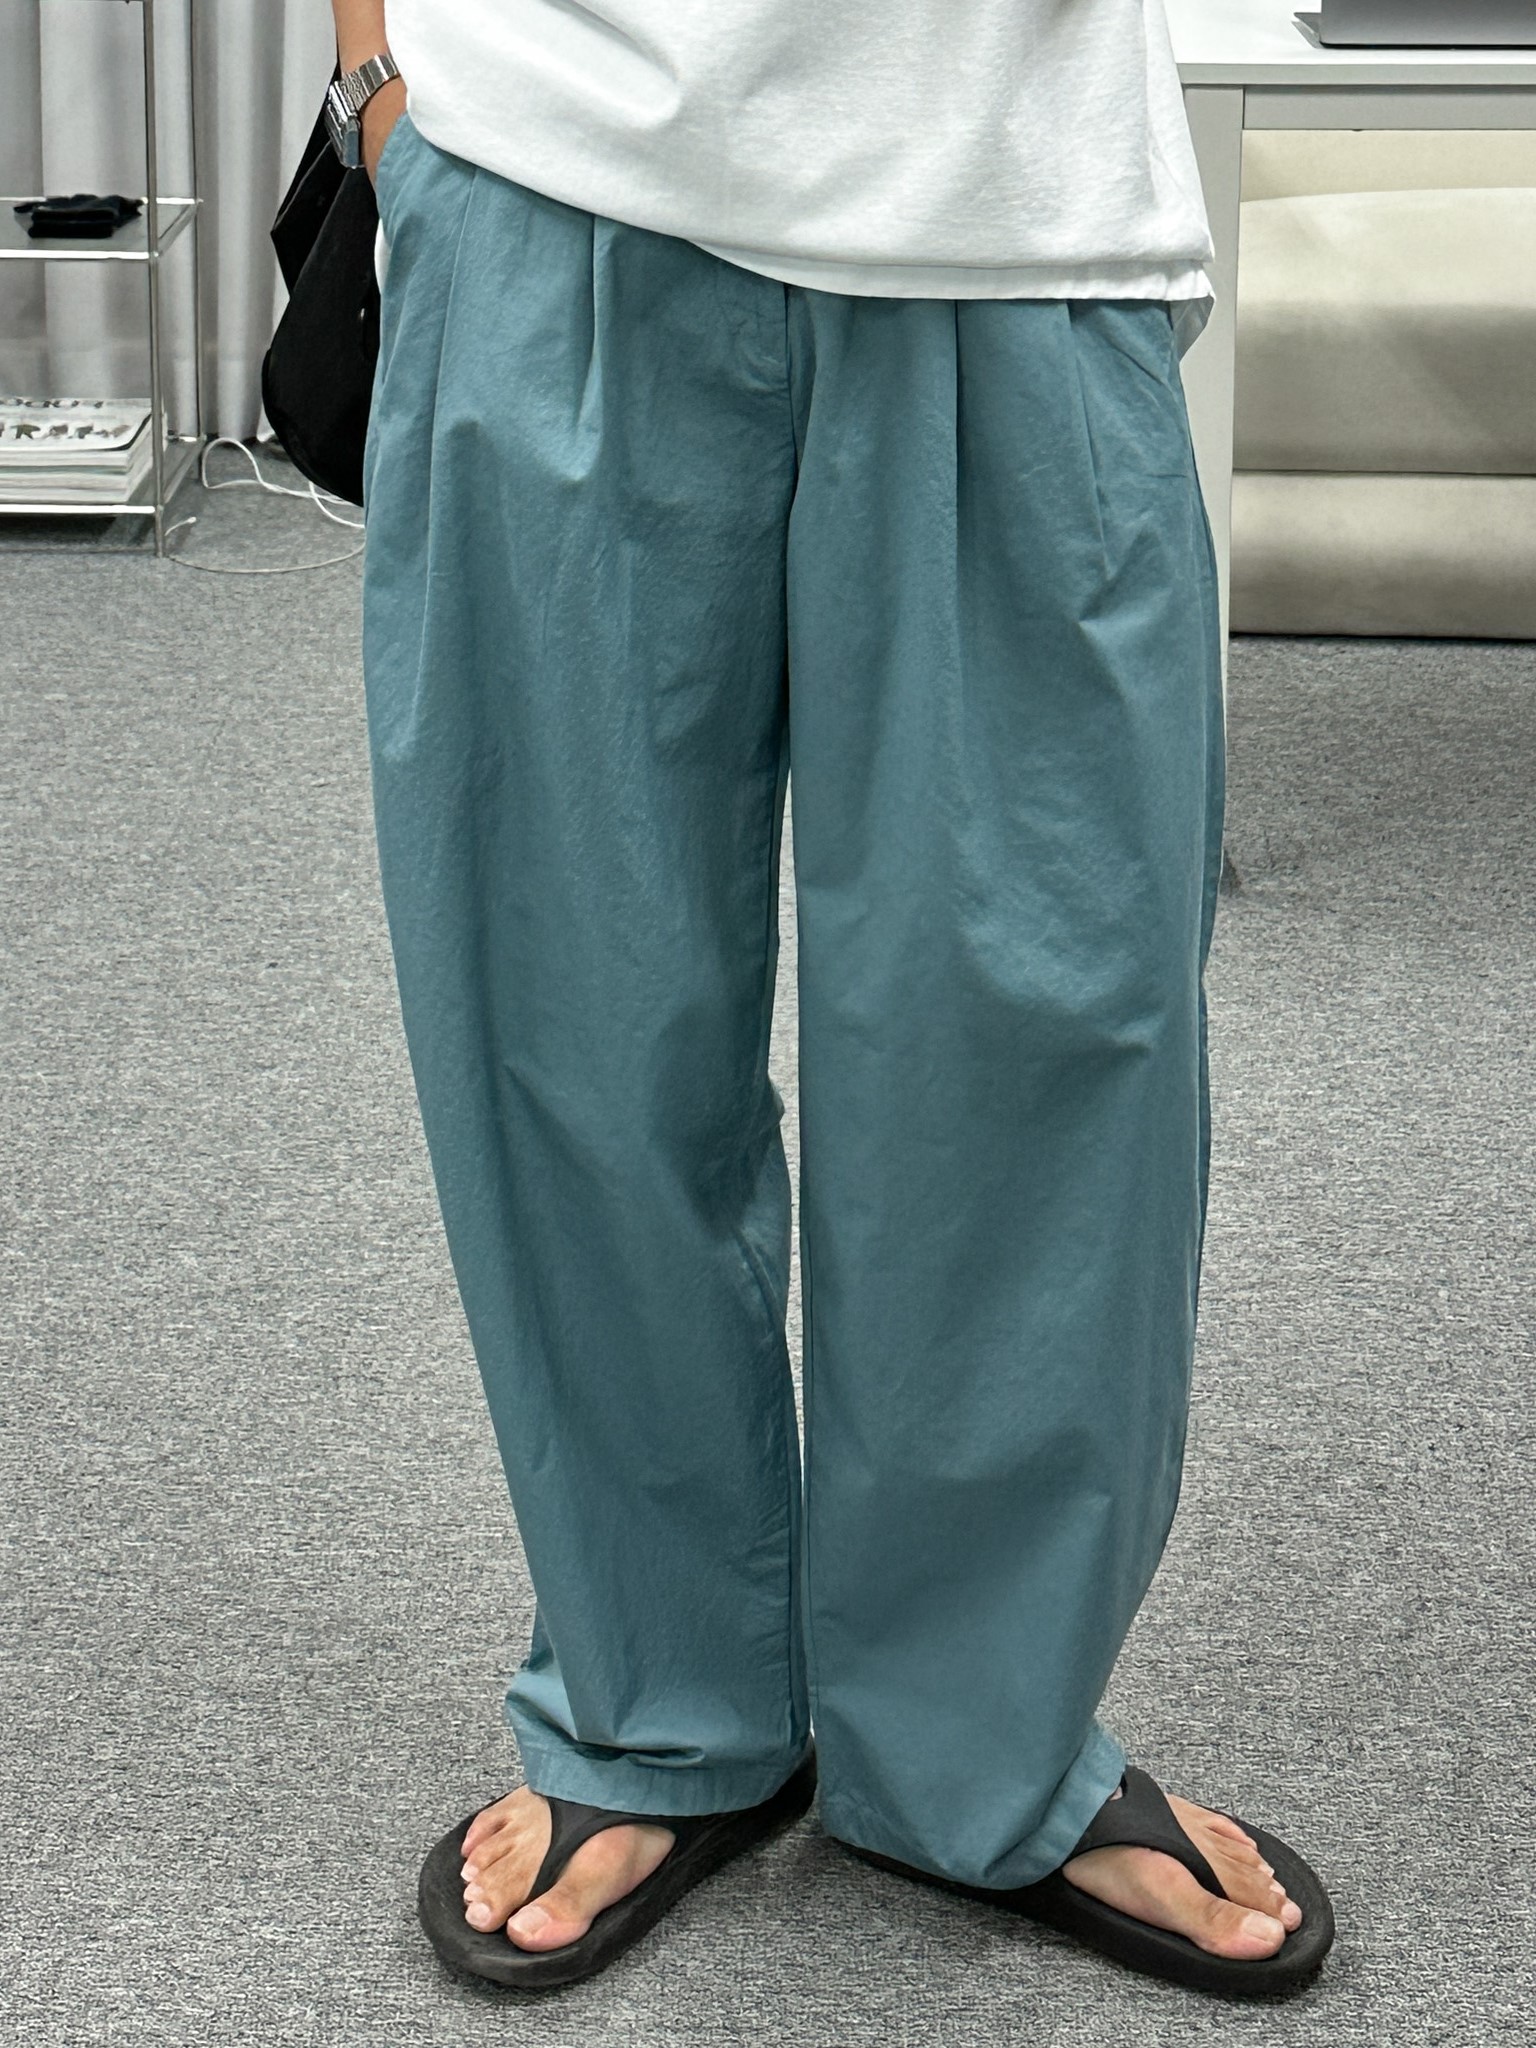 nelson pin-tuck wide pants (KHAKI, SKY BLUE)